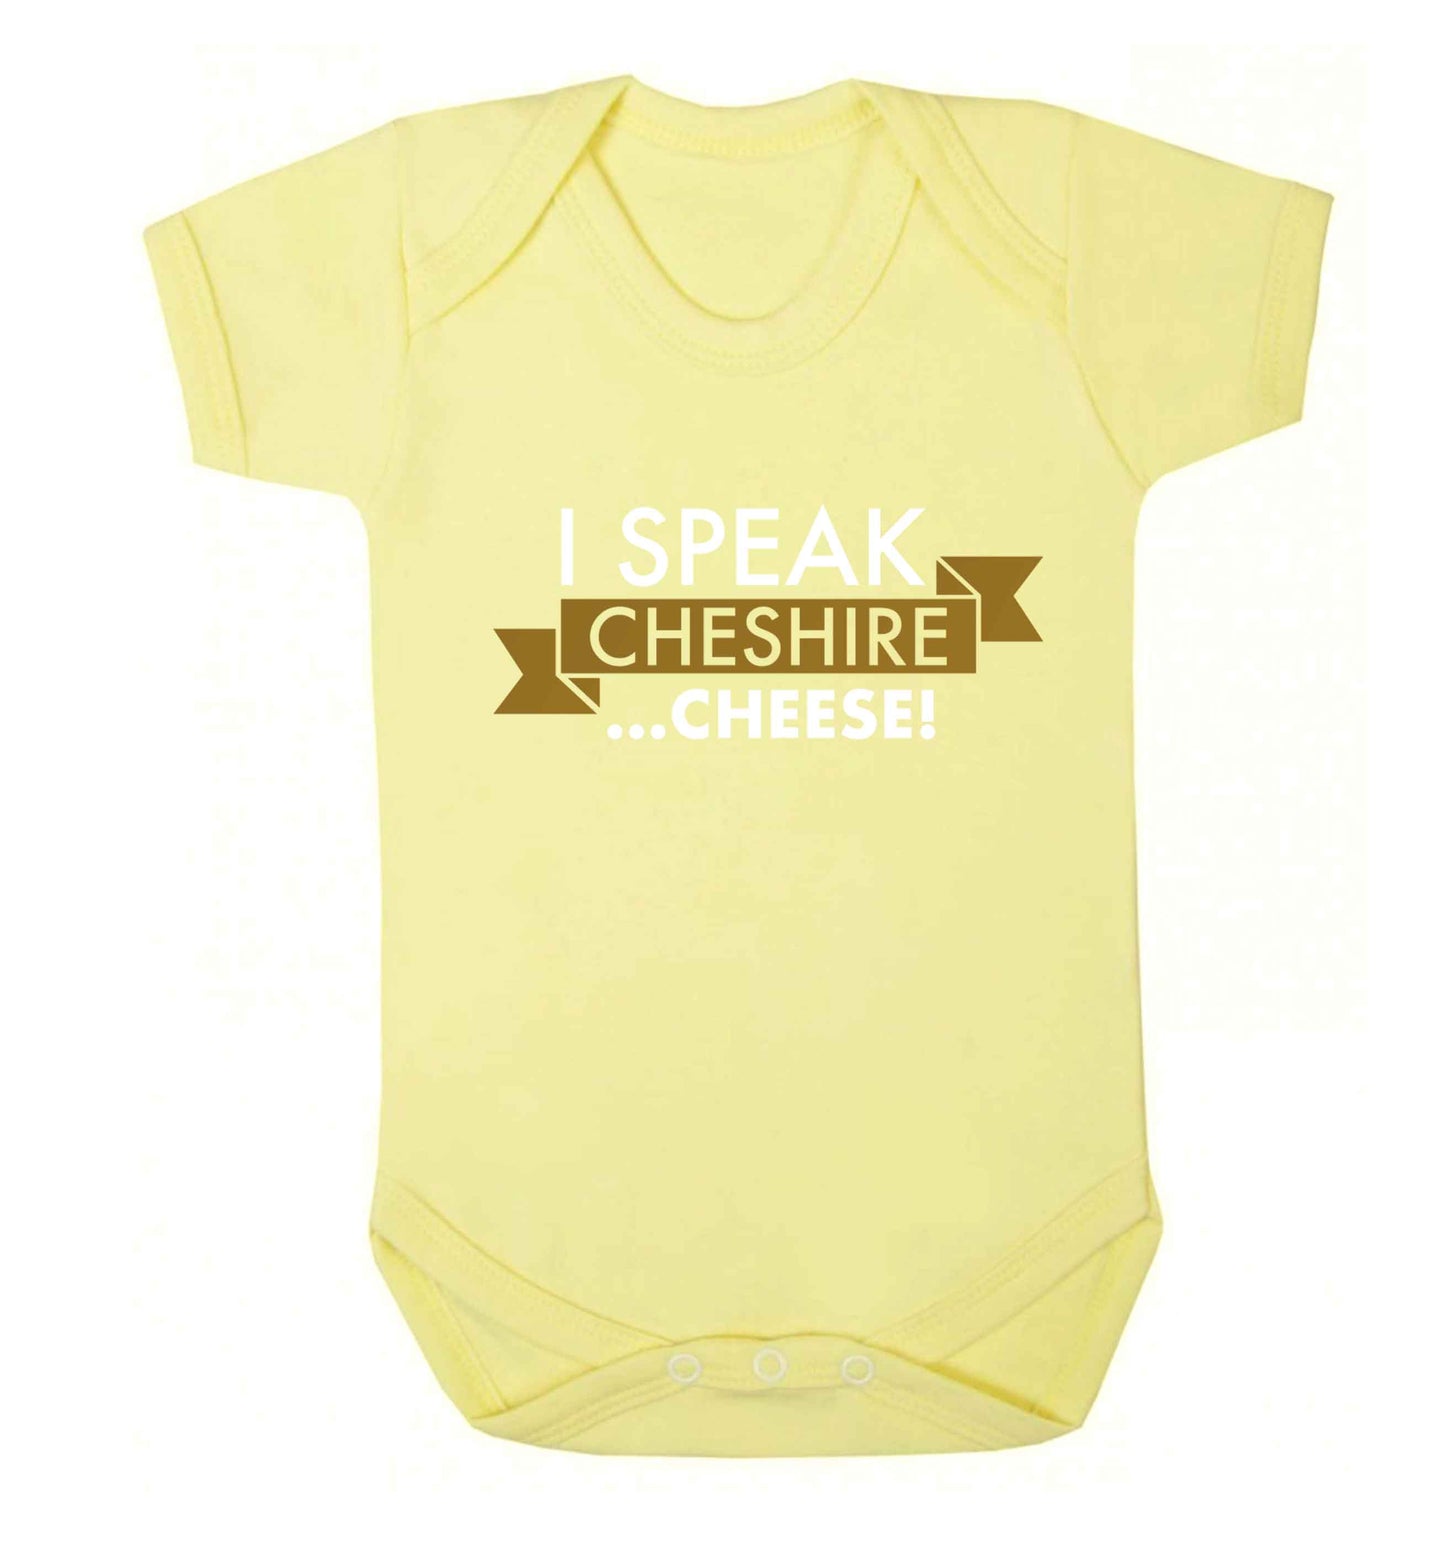 I speak Cheshire cheese Baby Vest pale yellow 18-24 months